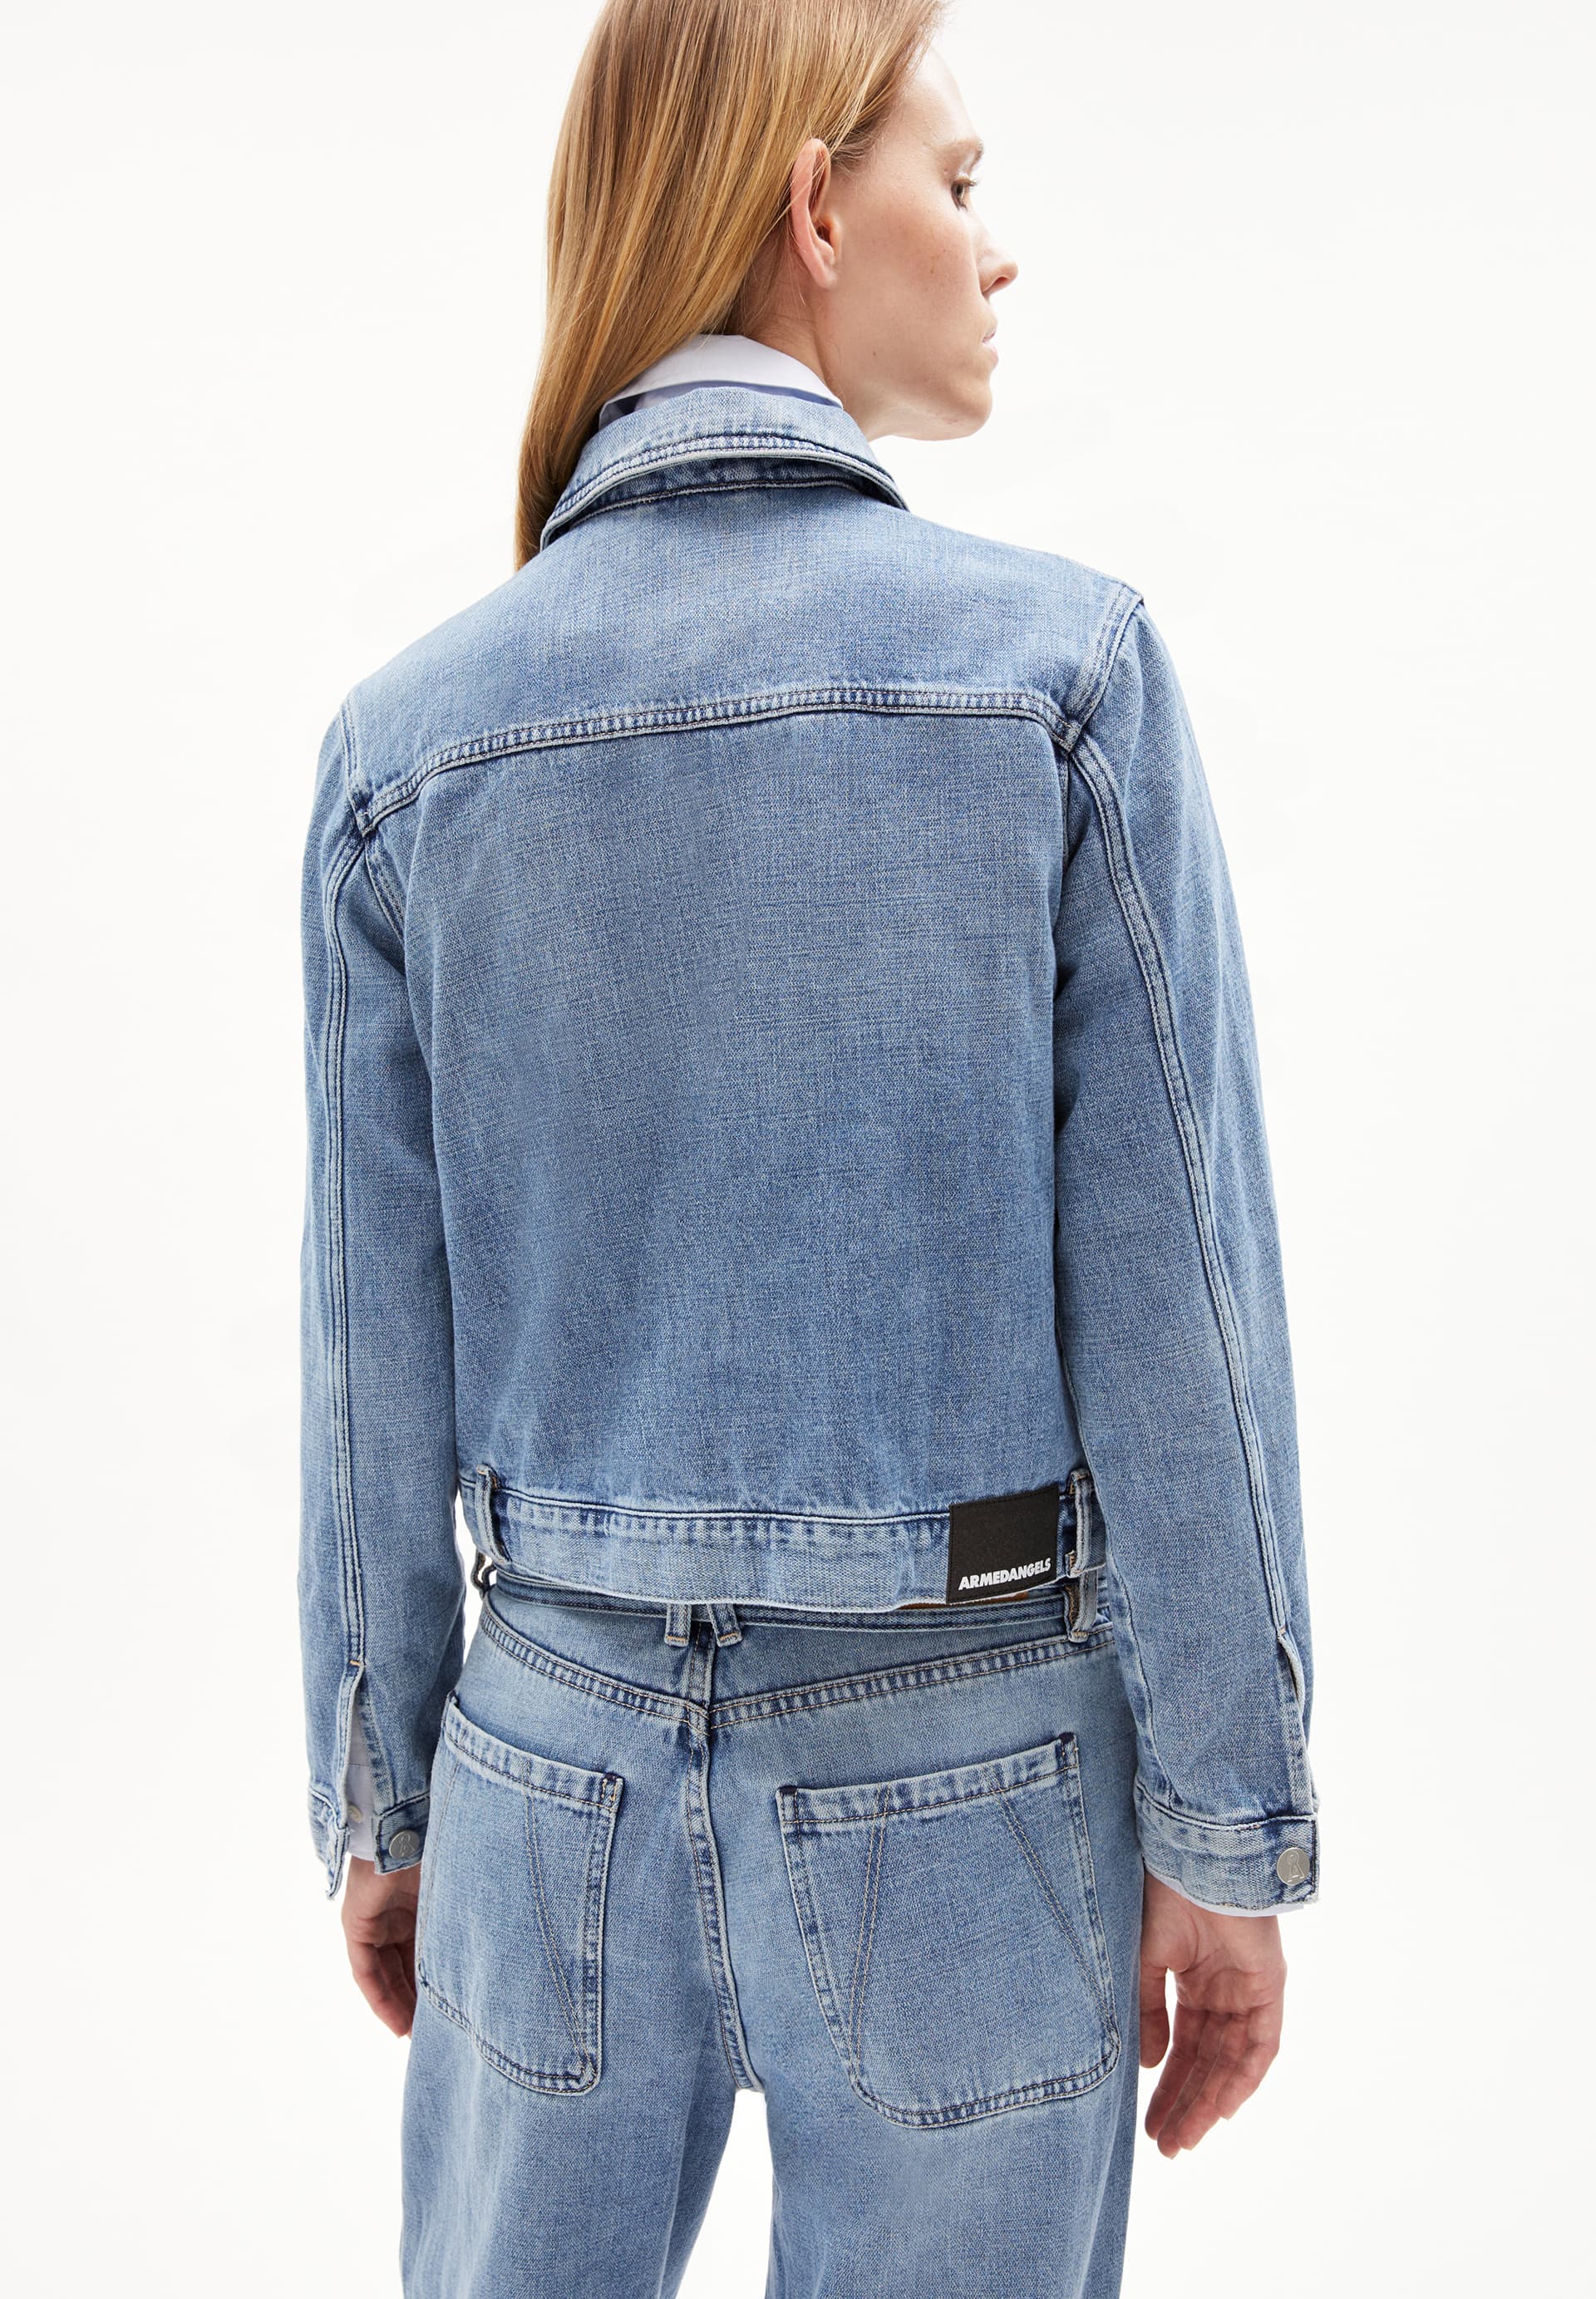 BLUSONAA Denim Jacket Oversized Fit made of Organic Cotton